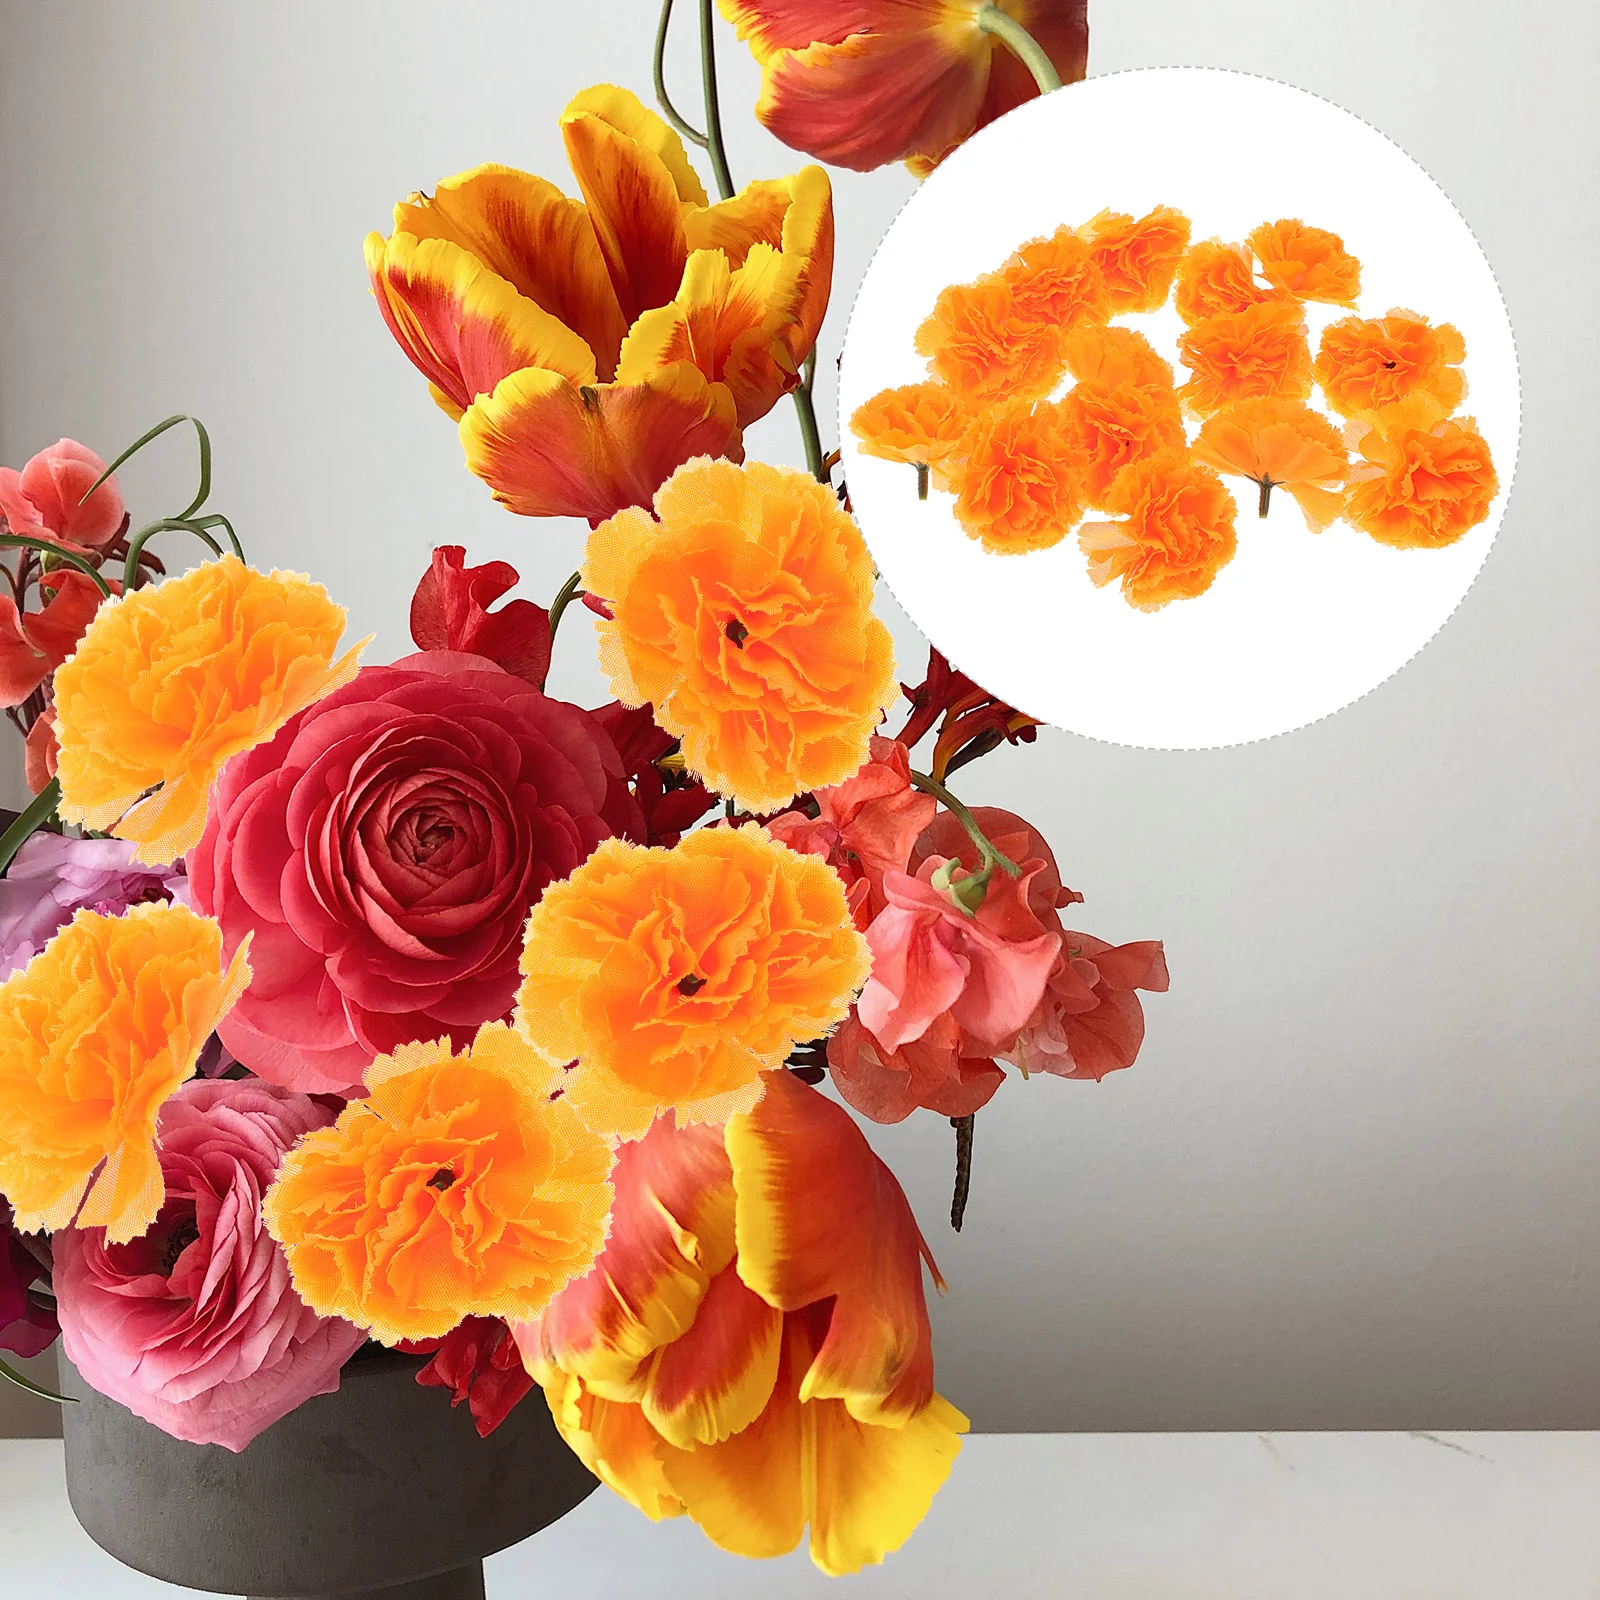 50 Pcs Silk Carnation Wedding Flowers Decorations Artificial Marigold Garlands Faux Bulk Heads Wreath